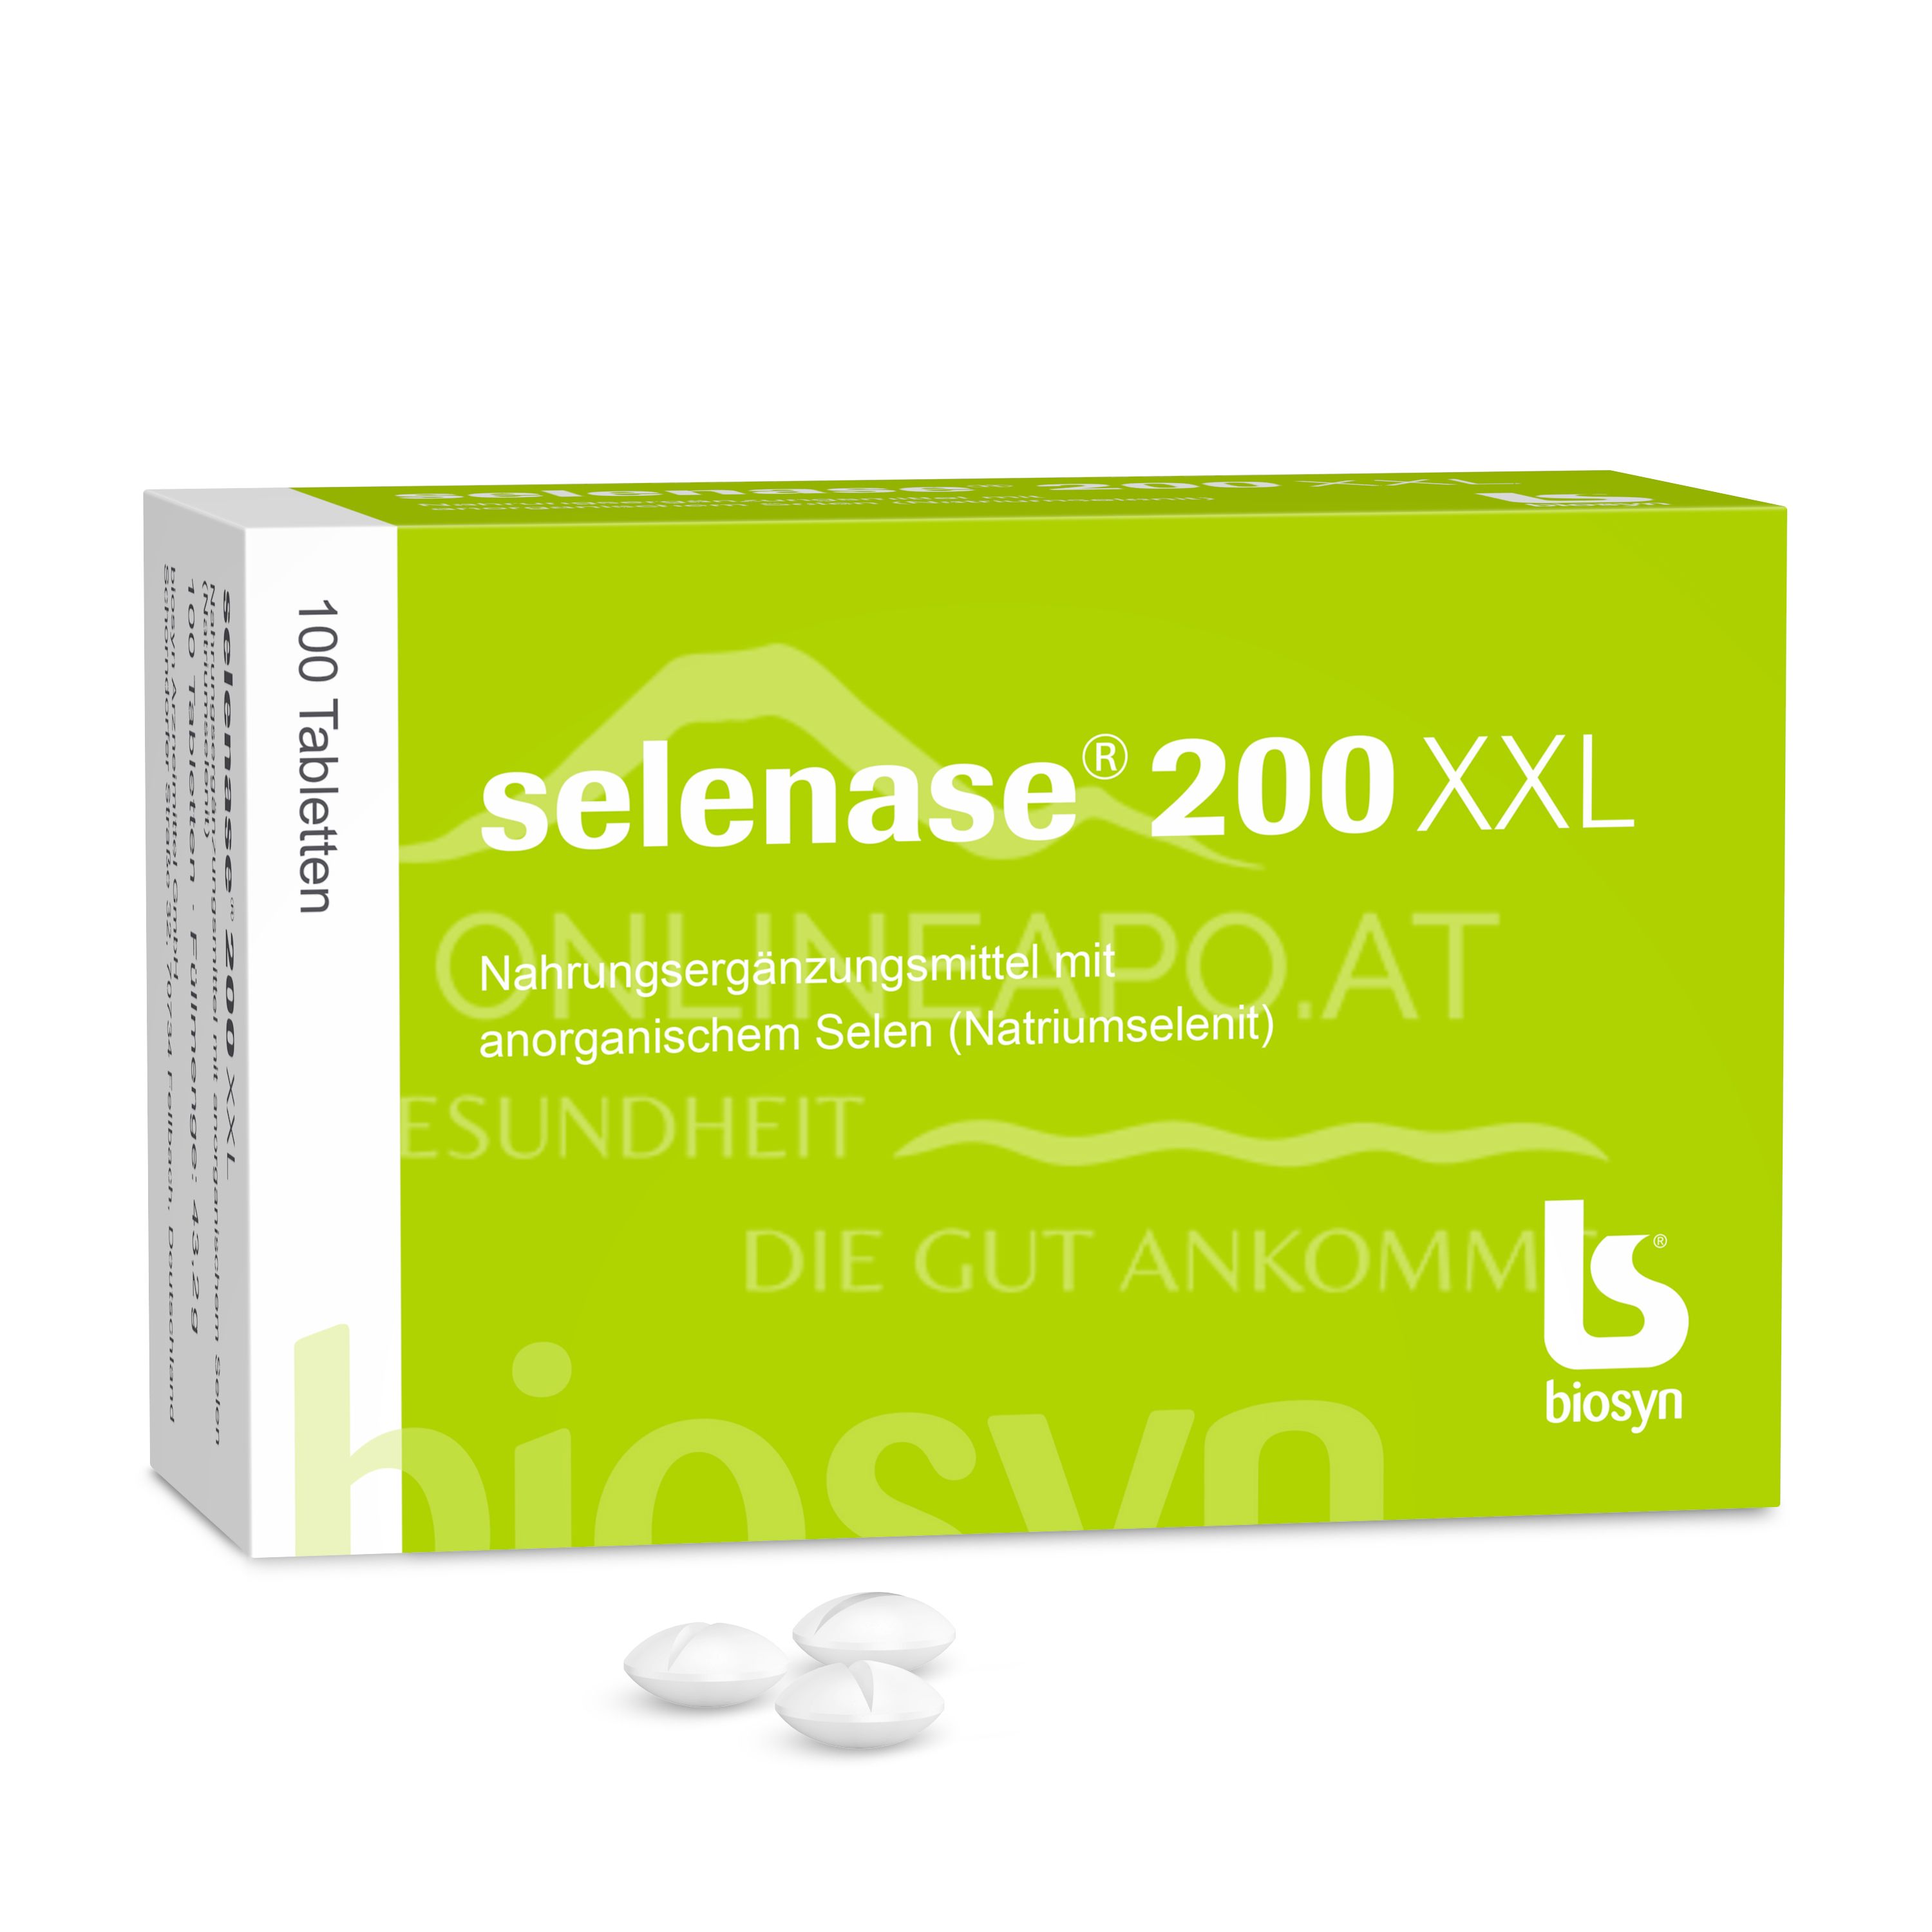 selenase® 200 XXL Tabletten